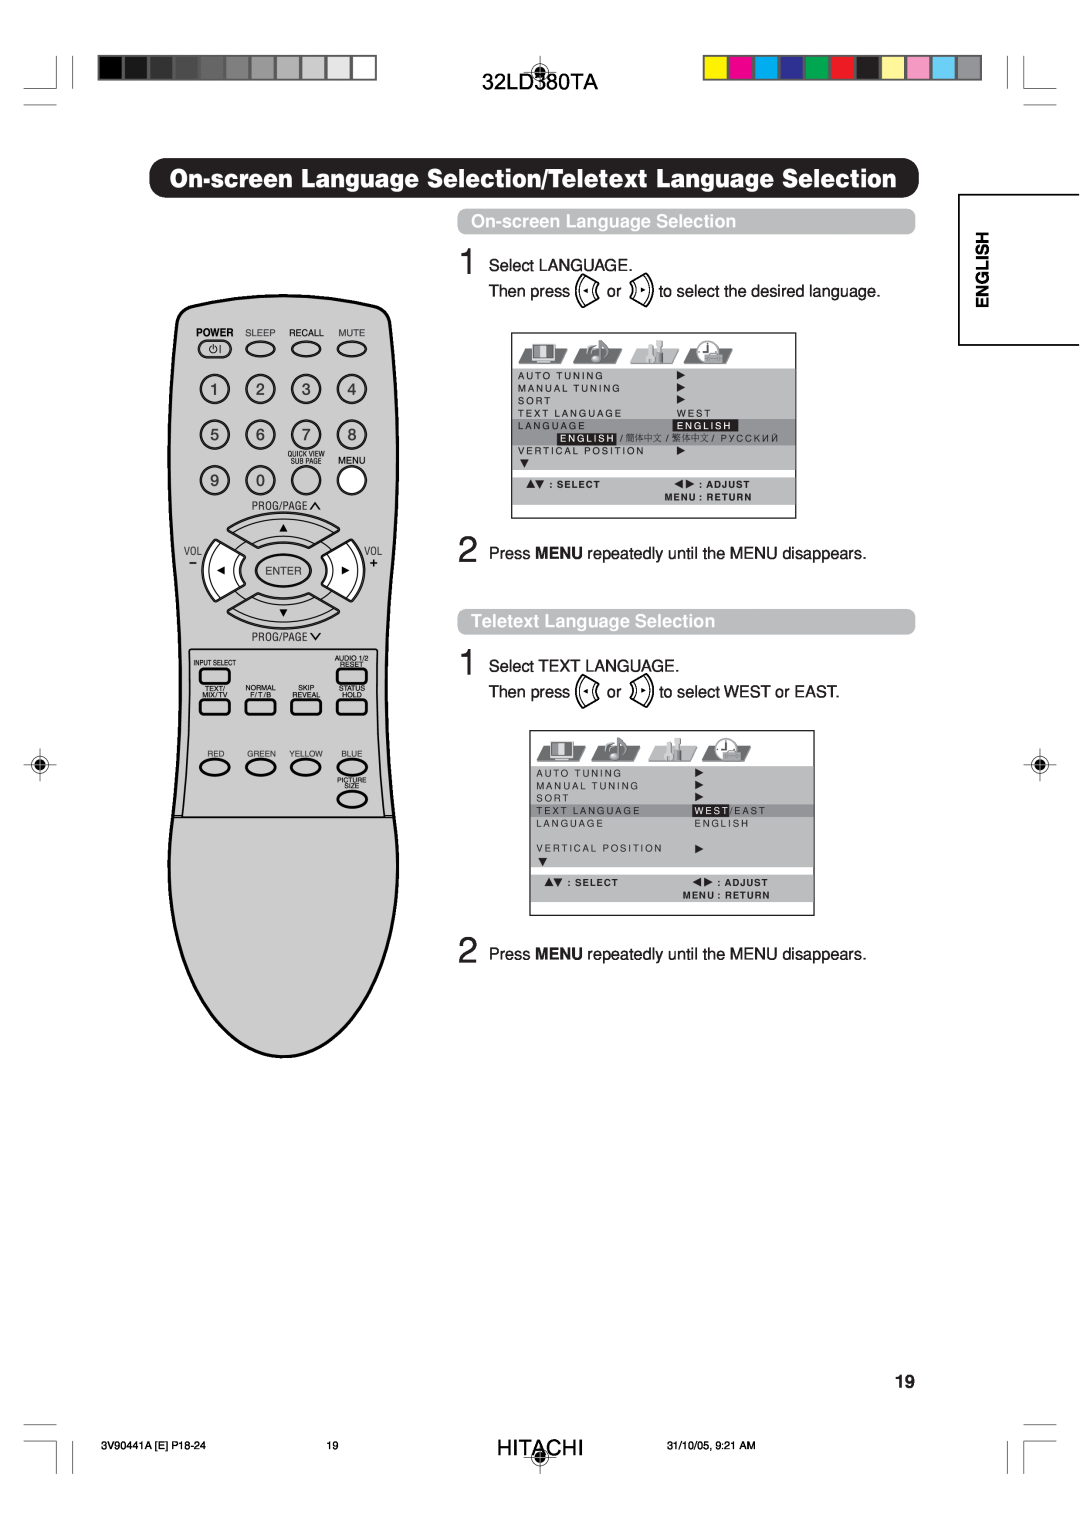 Hitachi 32LD380TA user manual On-screen Language Selection/Teletext Language Selection, Hitachi, English 